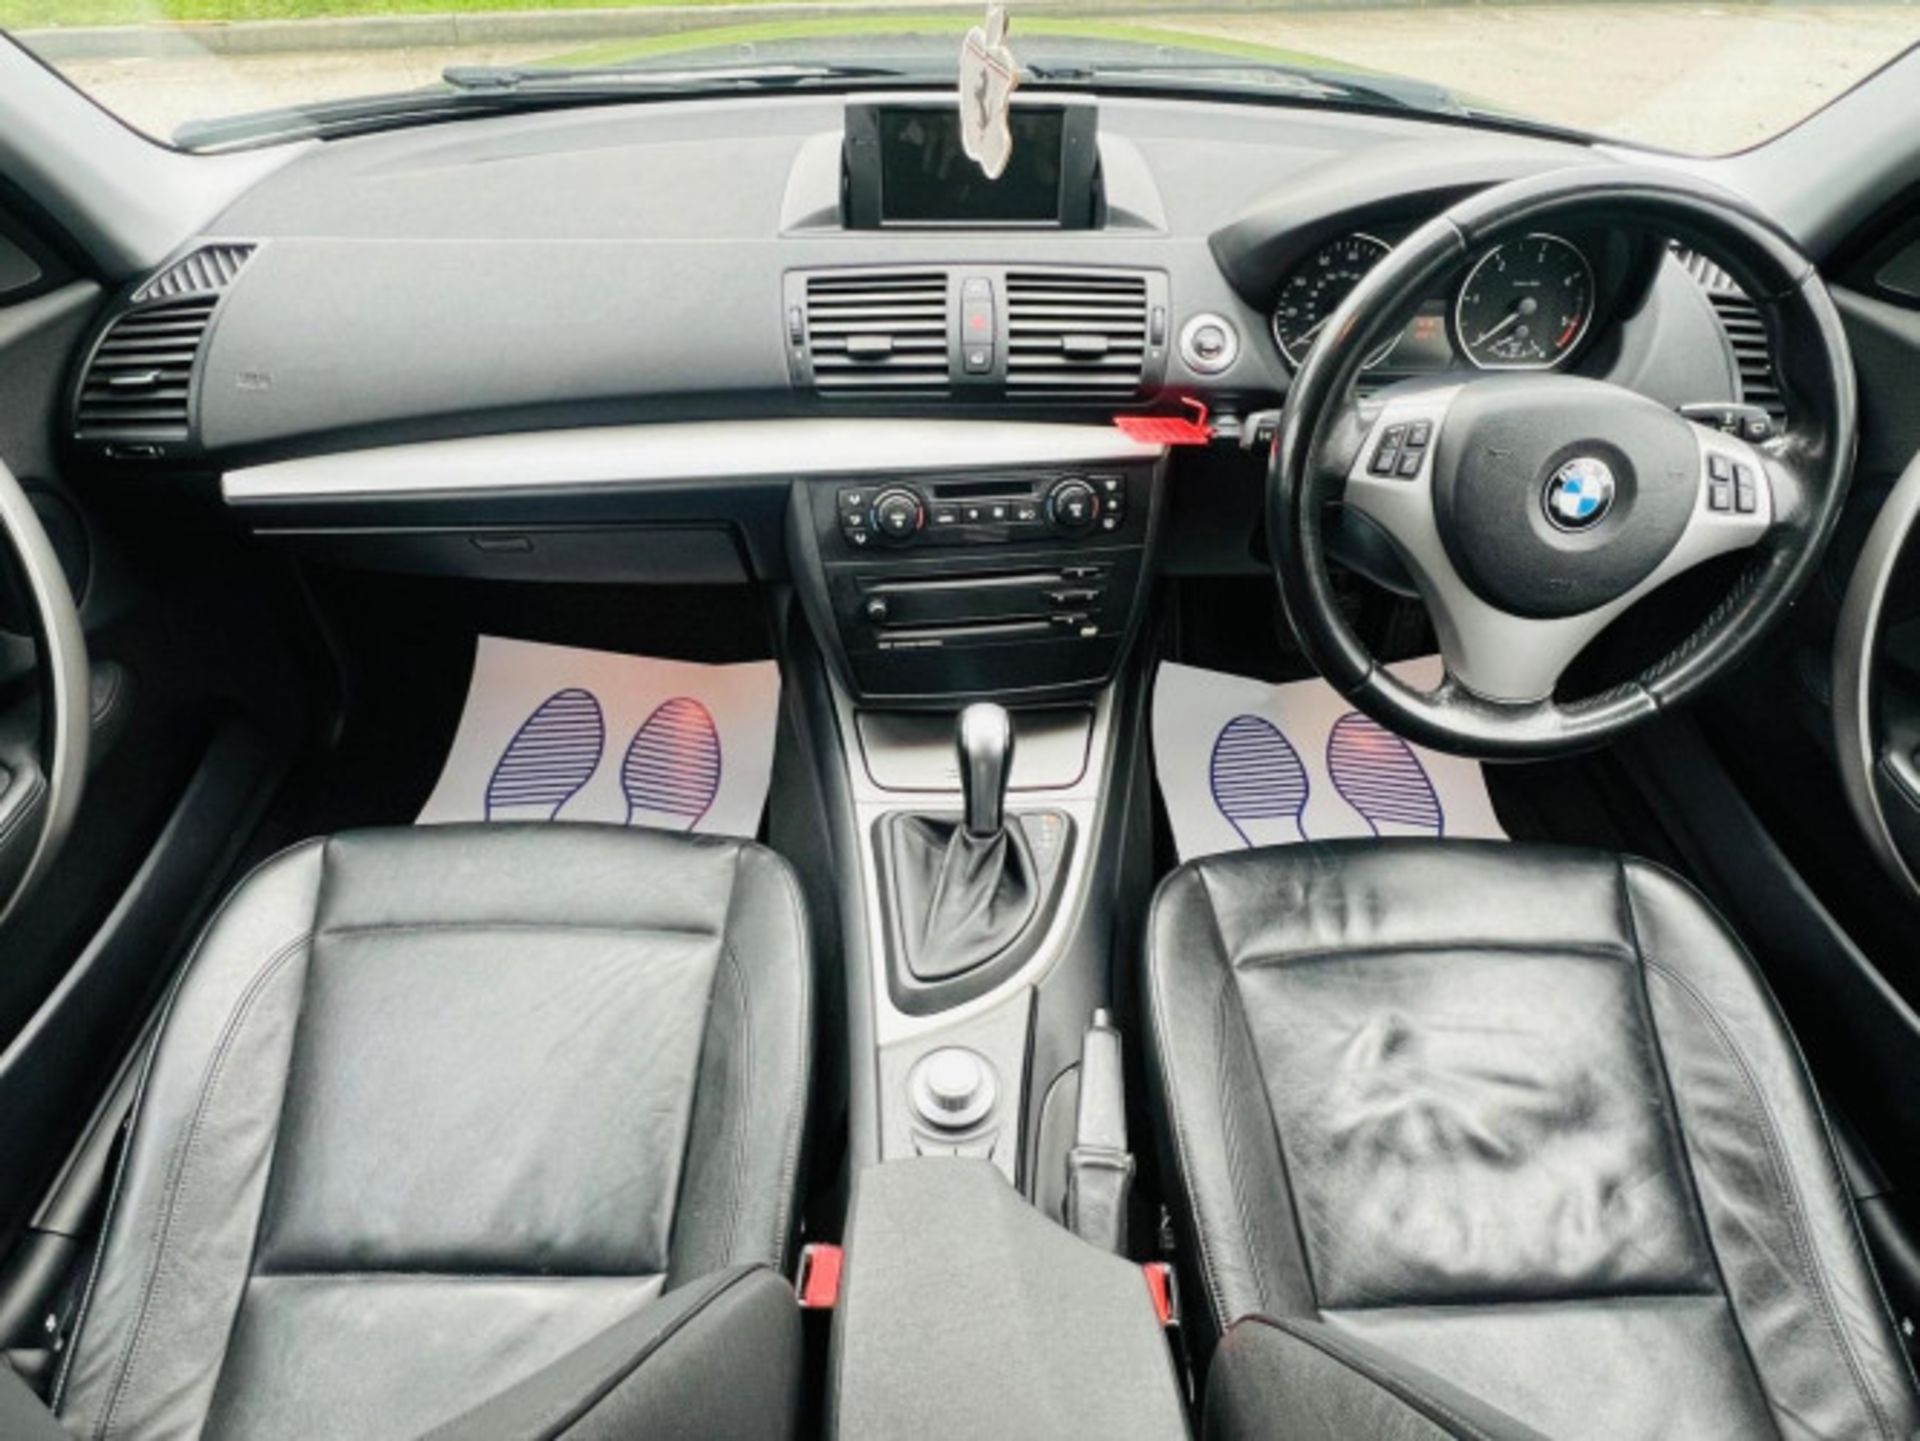 BMW 1 SERIES 2.0 120D SE STEPTRONIC - STYLE, PERFORMANCE >>--NO VAT ON HAMMER--<< - Image 82 of 91